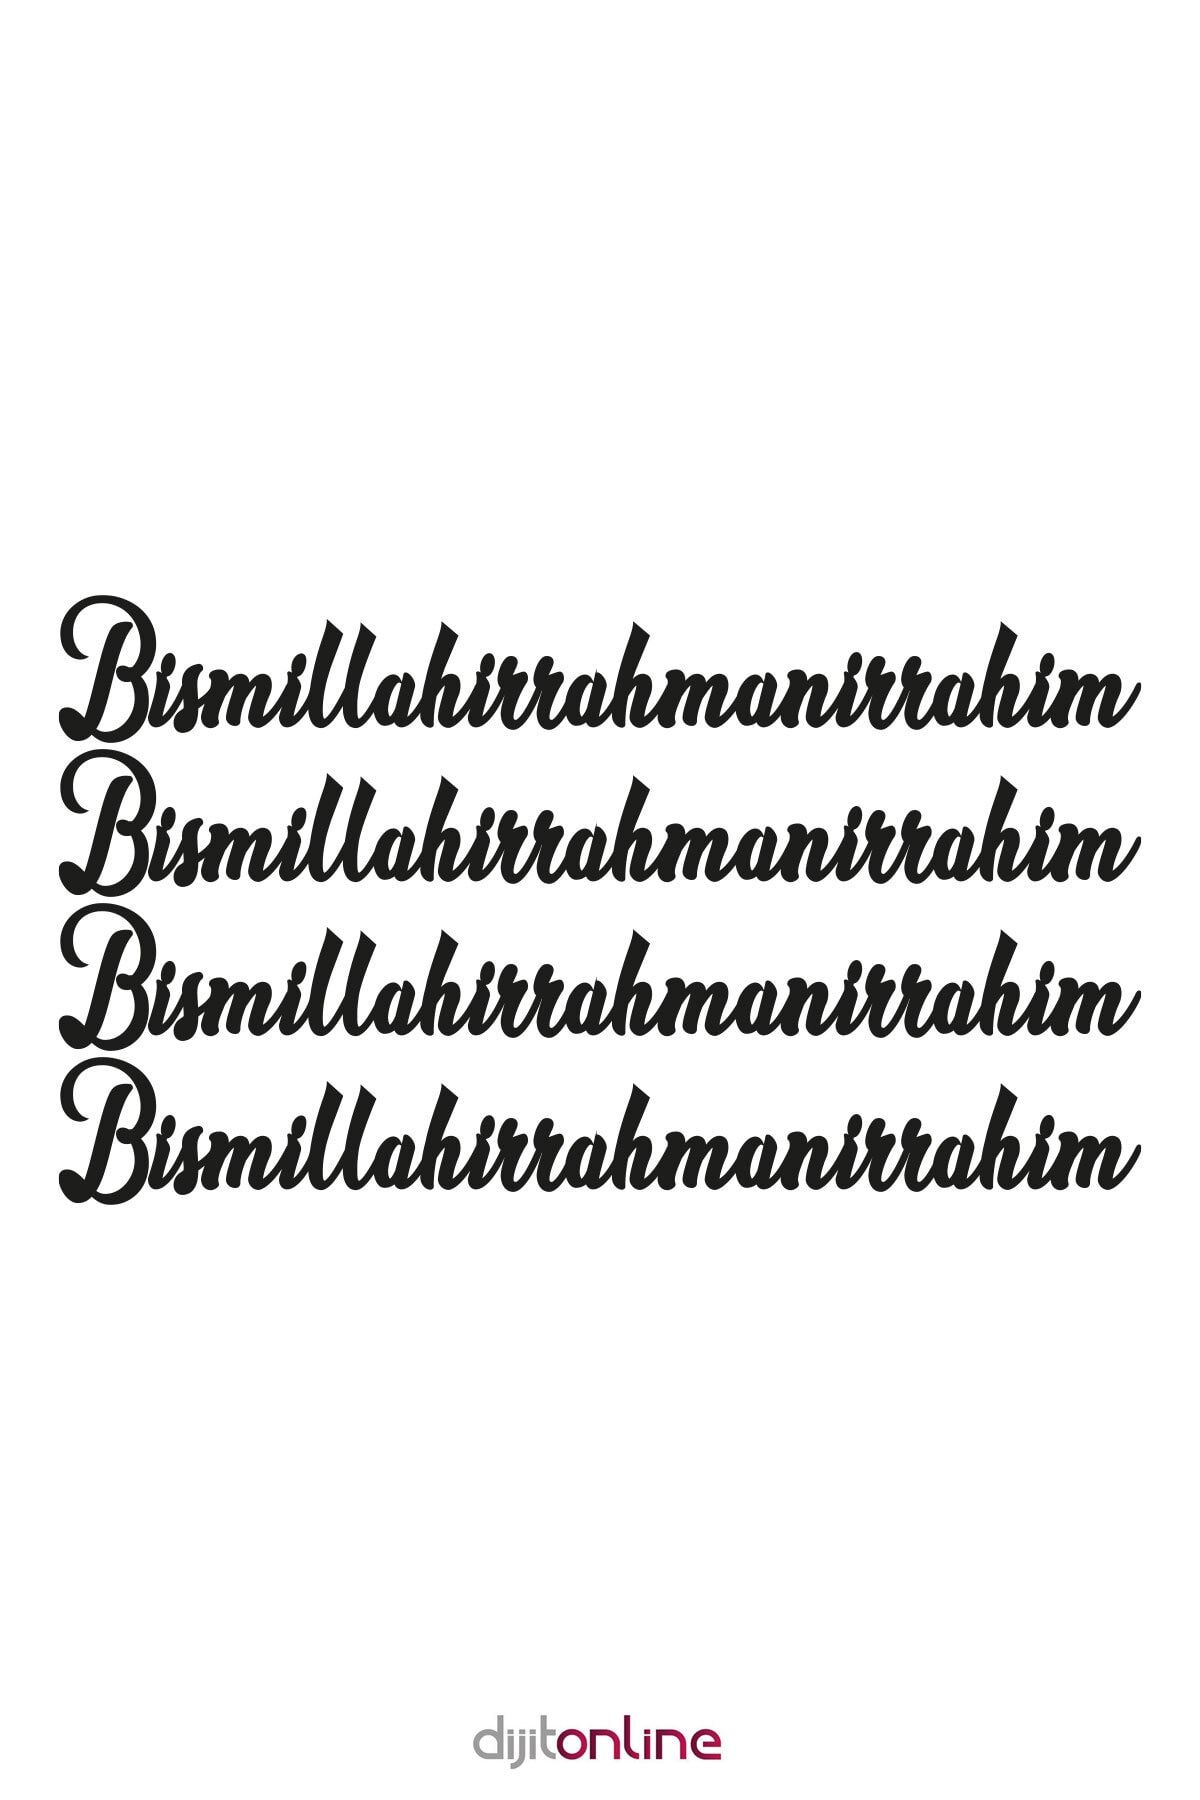 Dijitonline Besmele Sticker, Bismillahirrahmanirrahim, 4 Adet Besmele